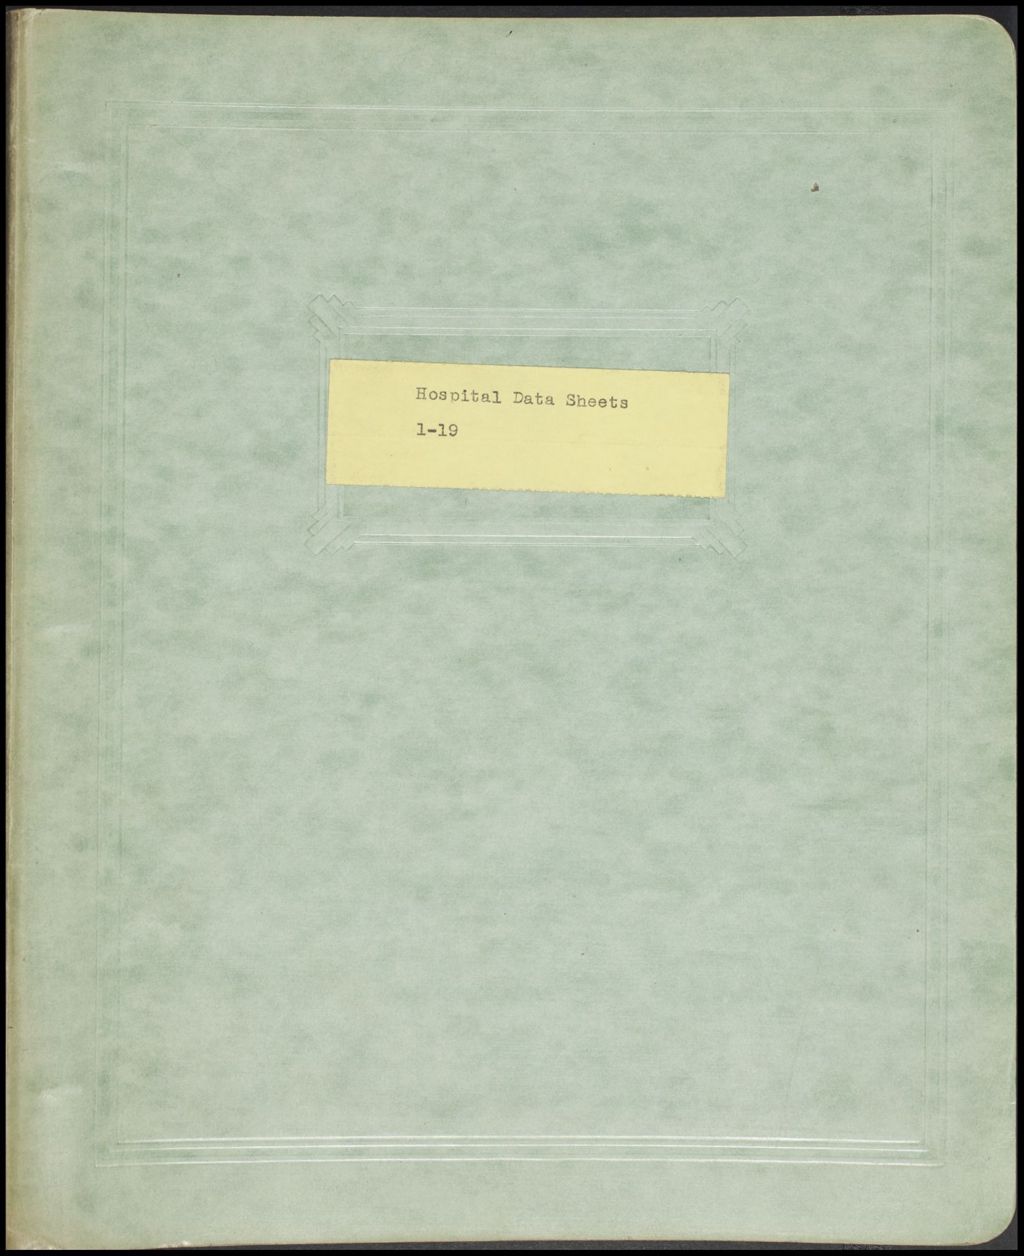 Miniature of Hospital Data Sheets Census Data, 1956 (Folder III-179)